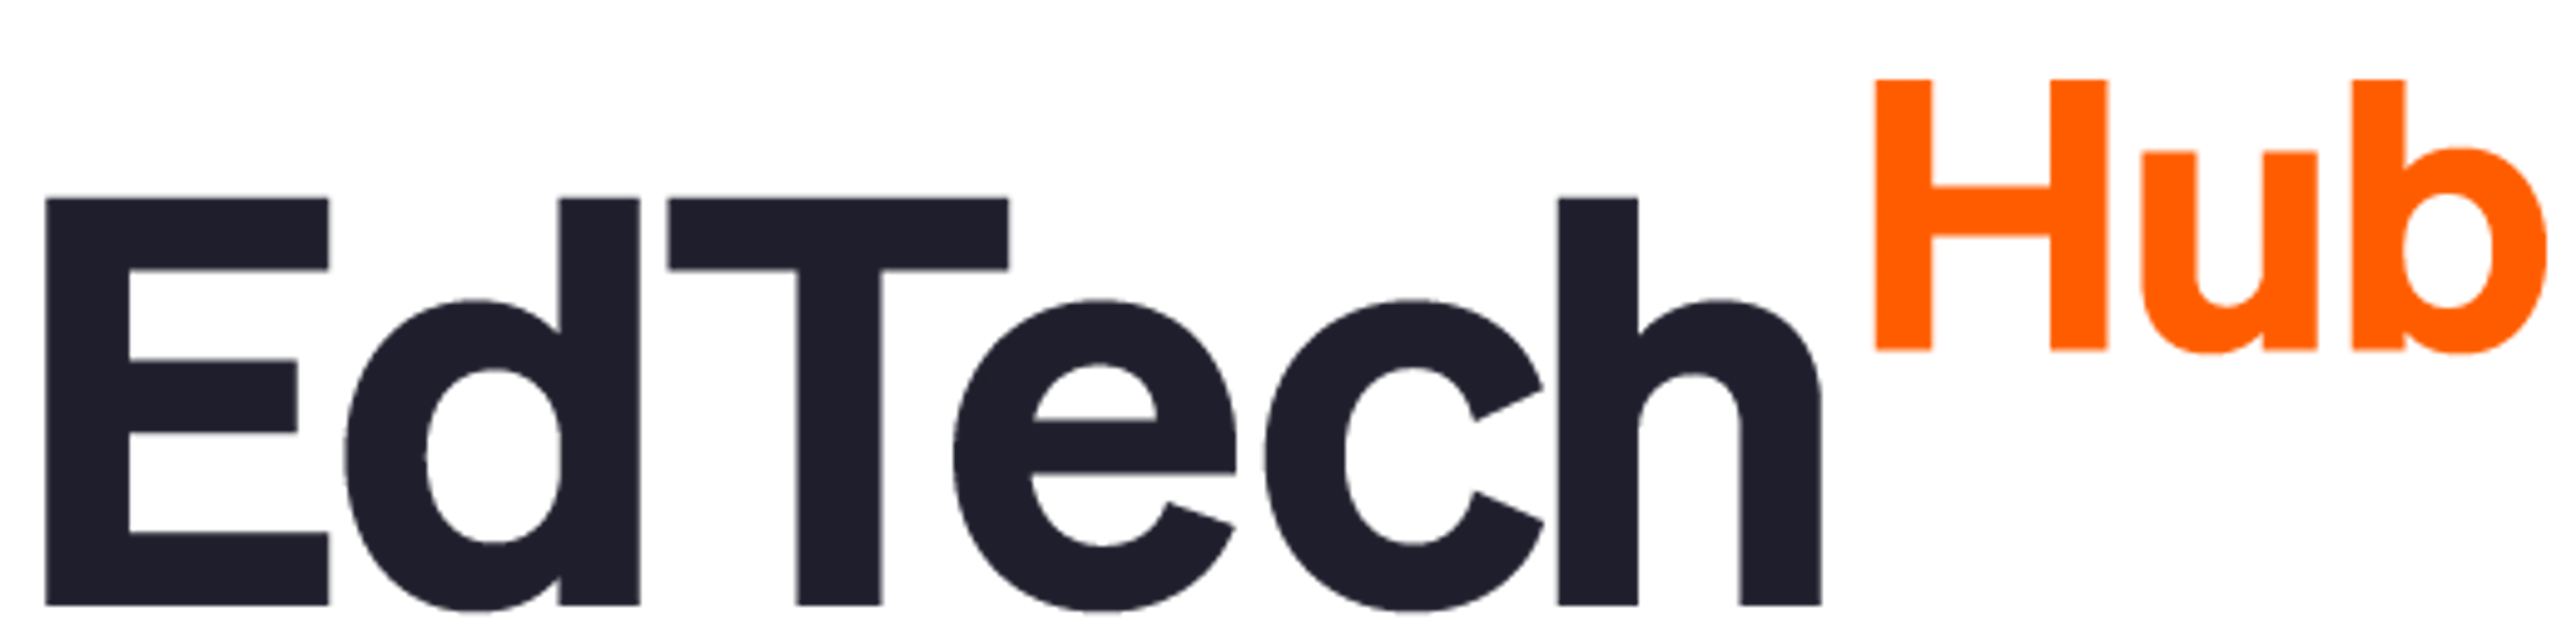 EdTechHub-Logo.webp